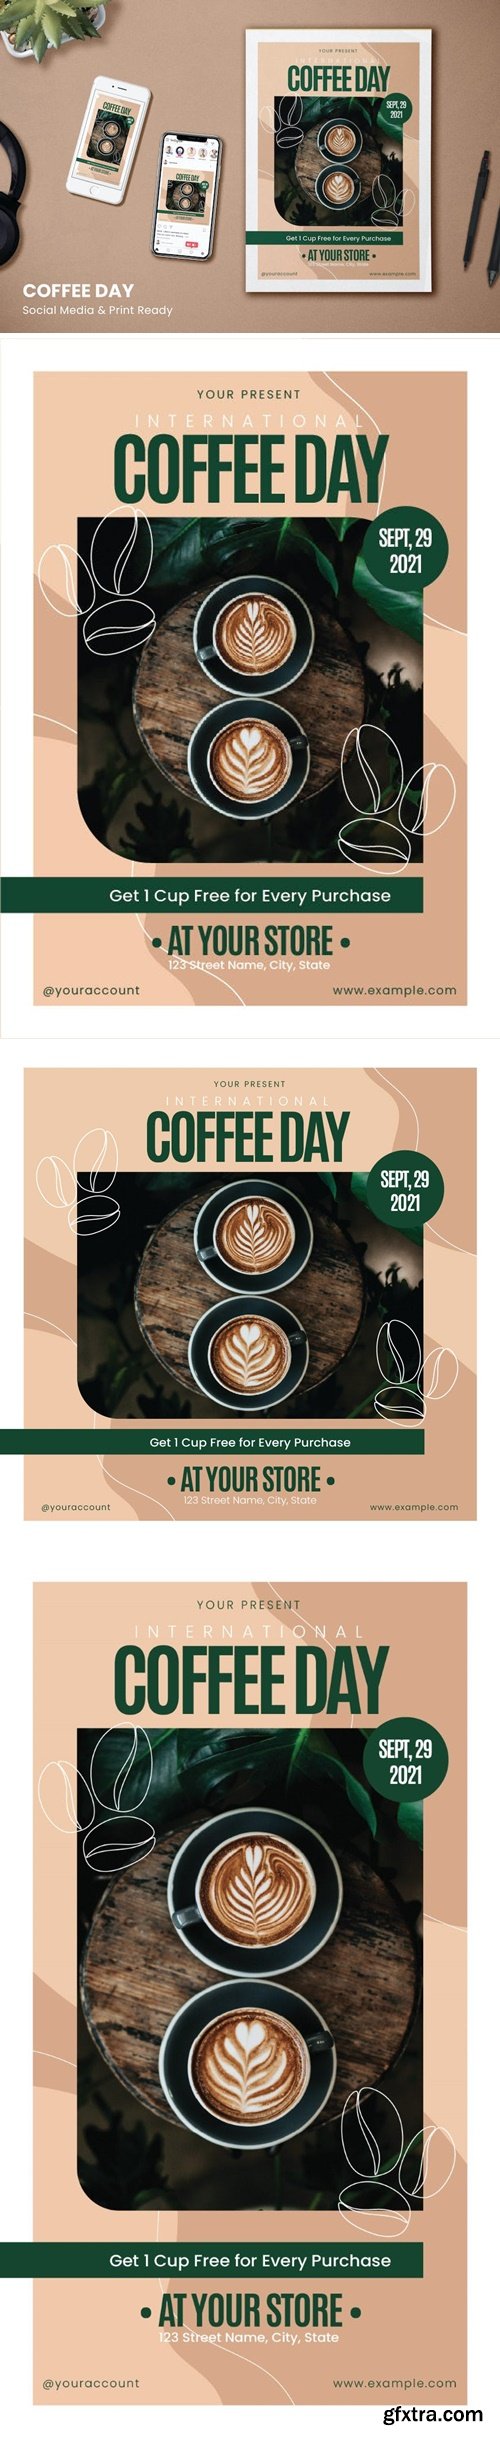 International Coffee Day - Flyer Media Kit 59S47T2